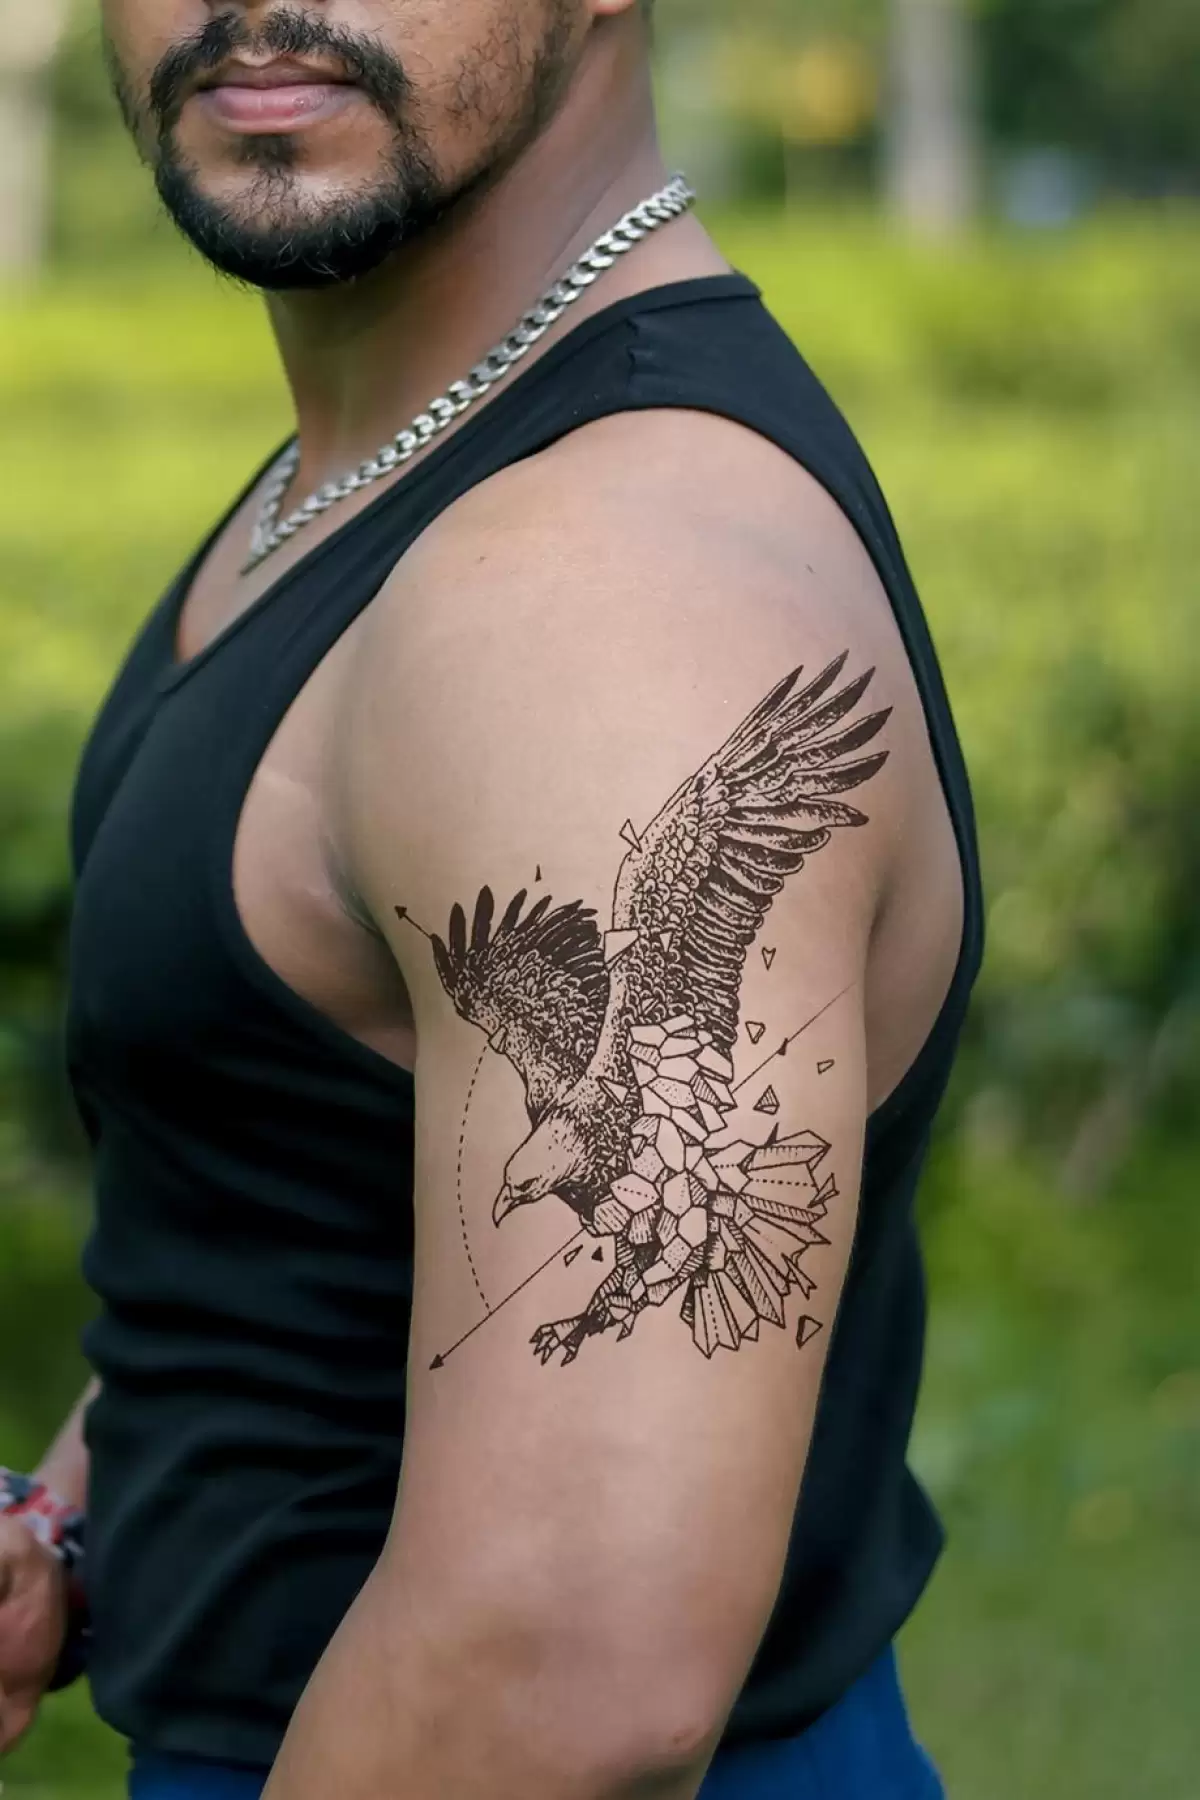 Kartal Geçici Dövme Tattoo